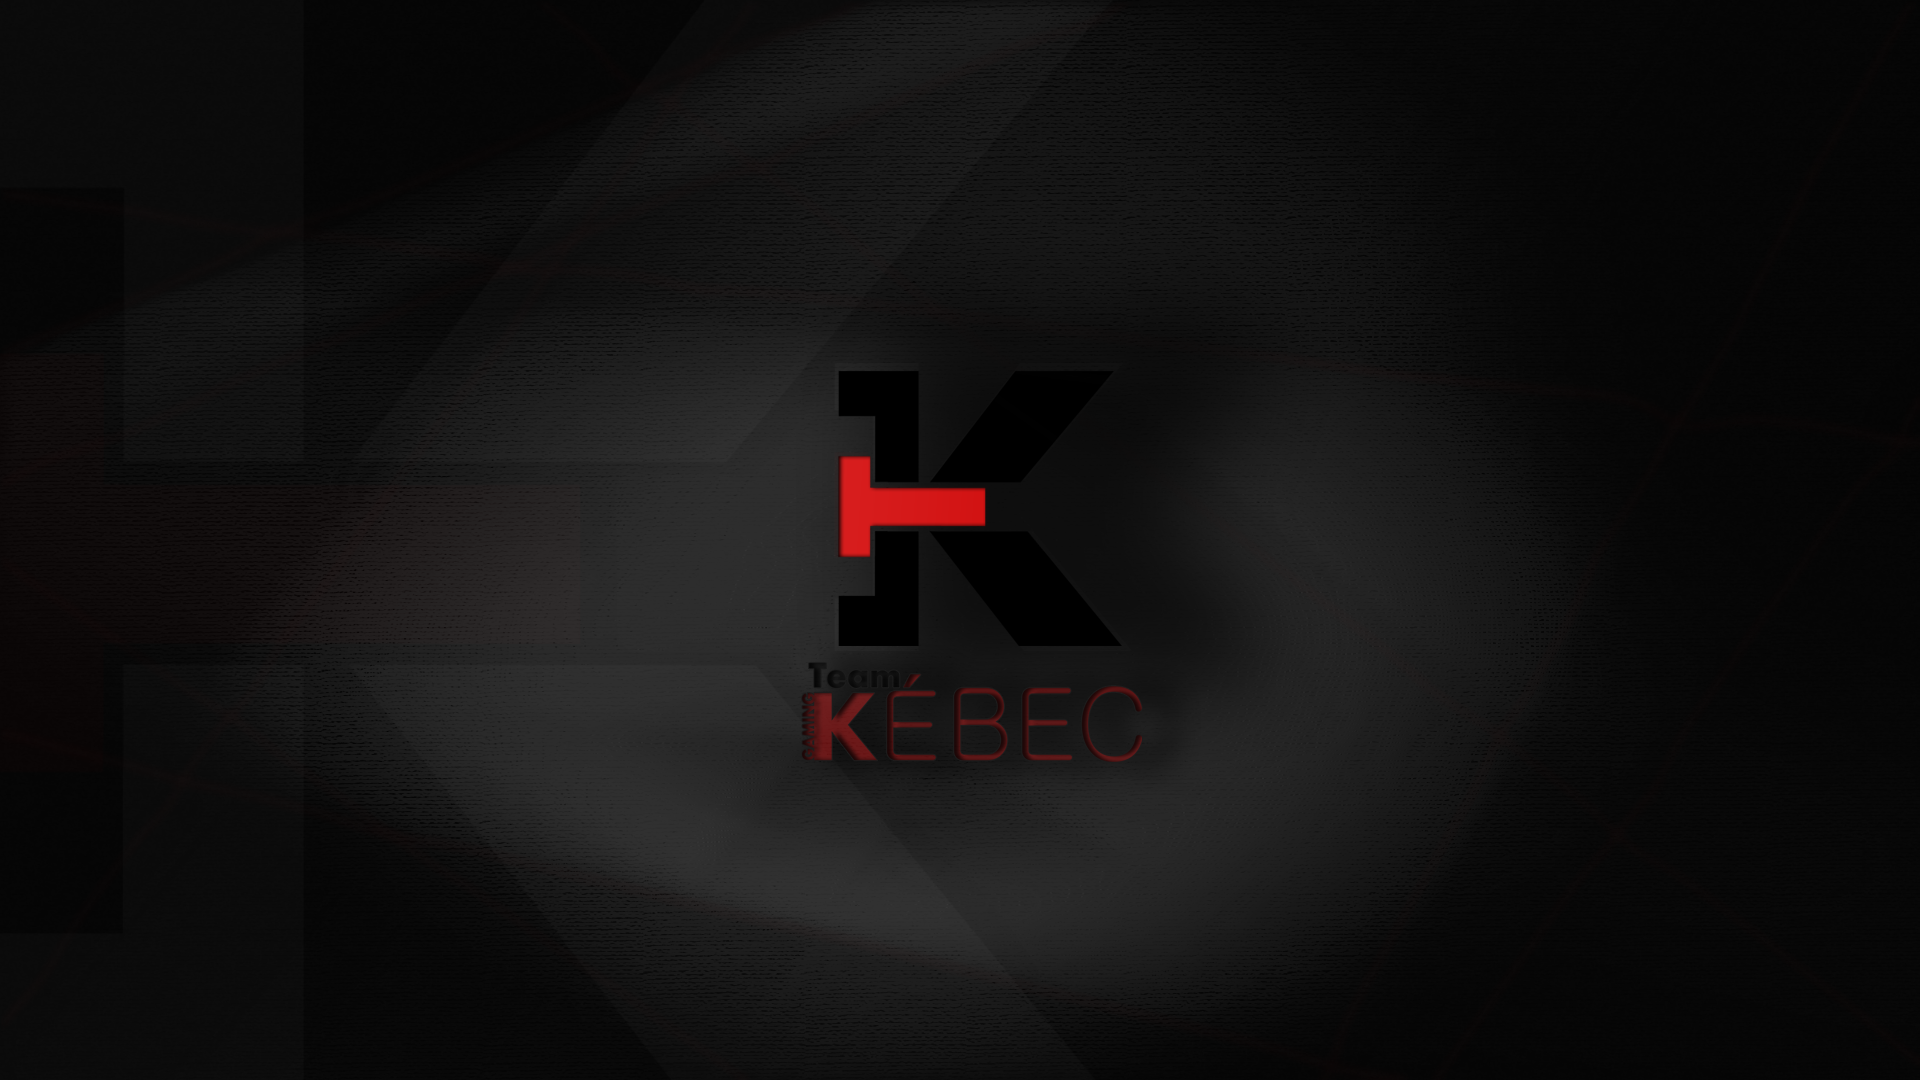 TeamKebec_wallpaper